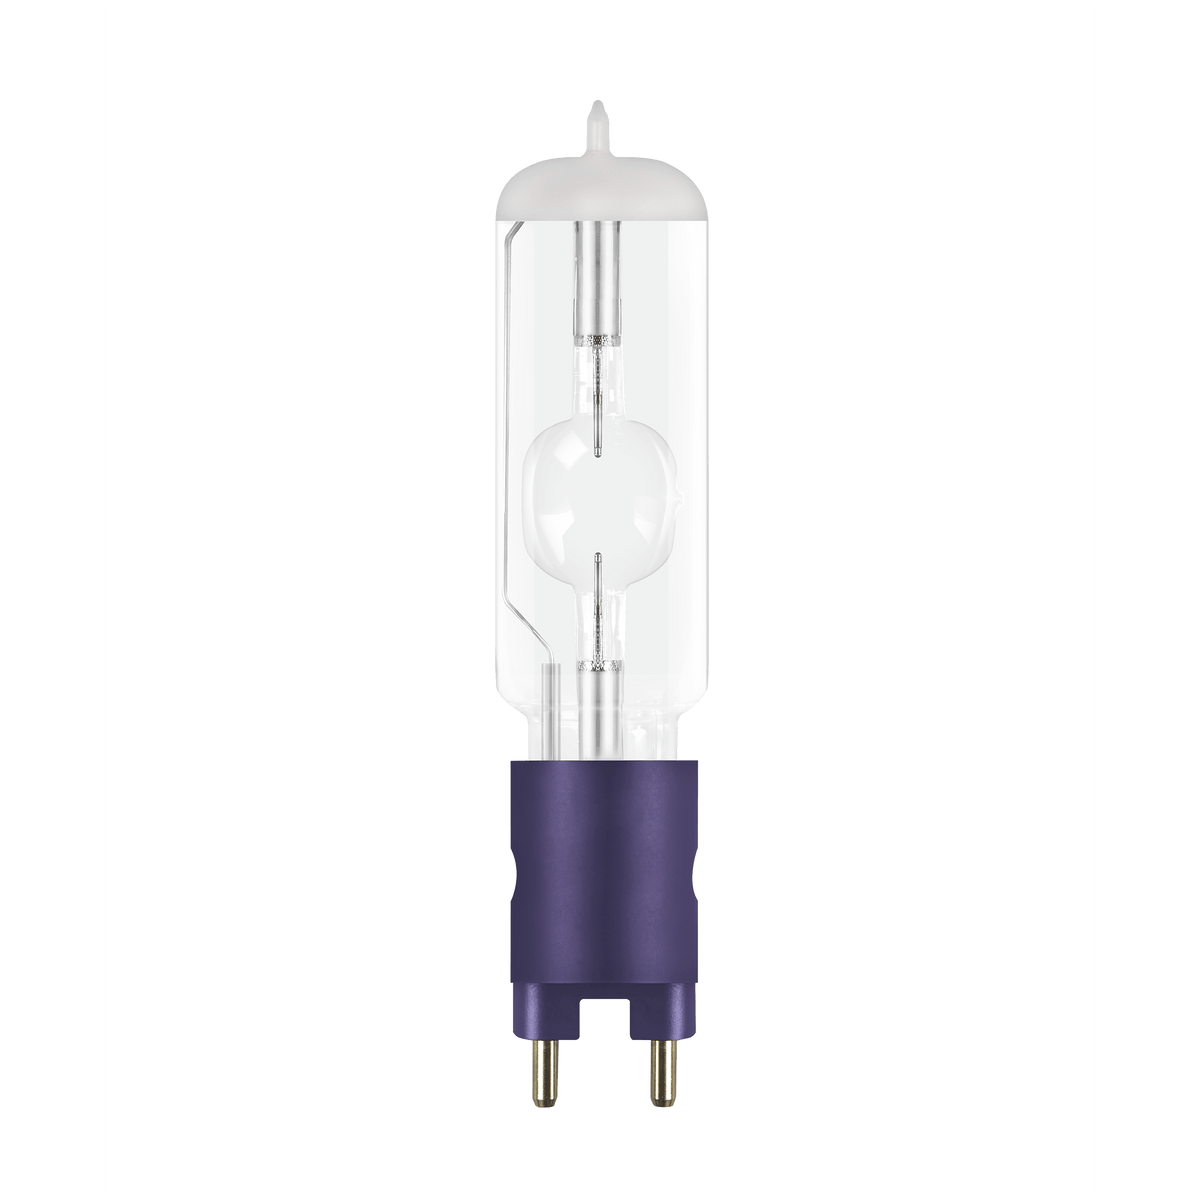 OSRAM HMI 54324 18000W/SE XS GX51 (18,000W) Lamp